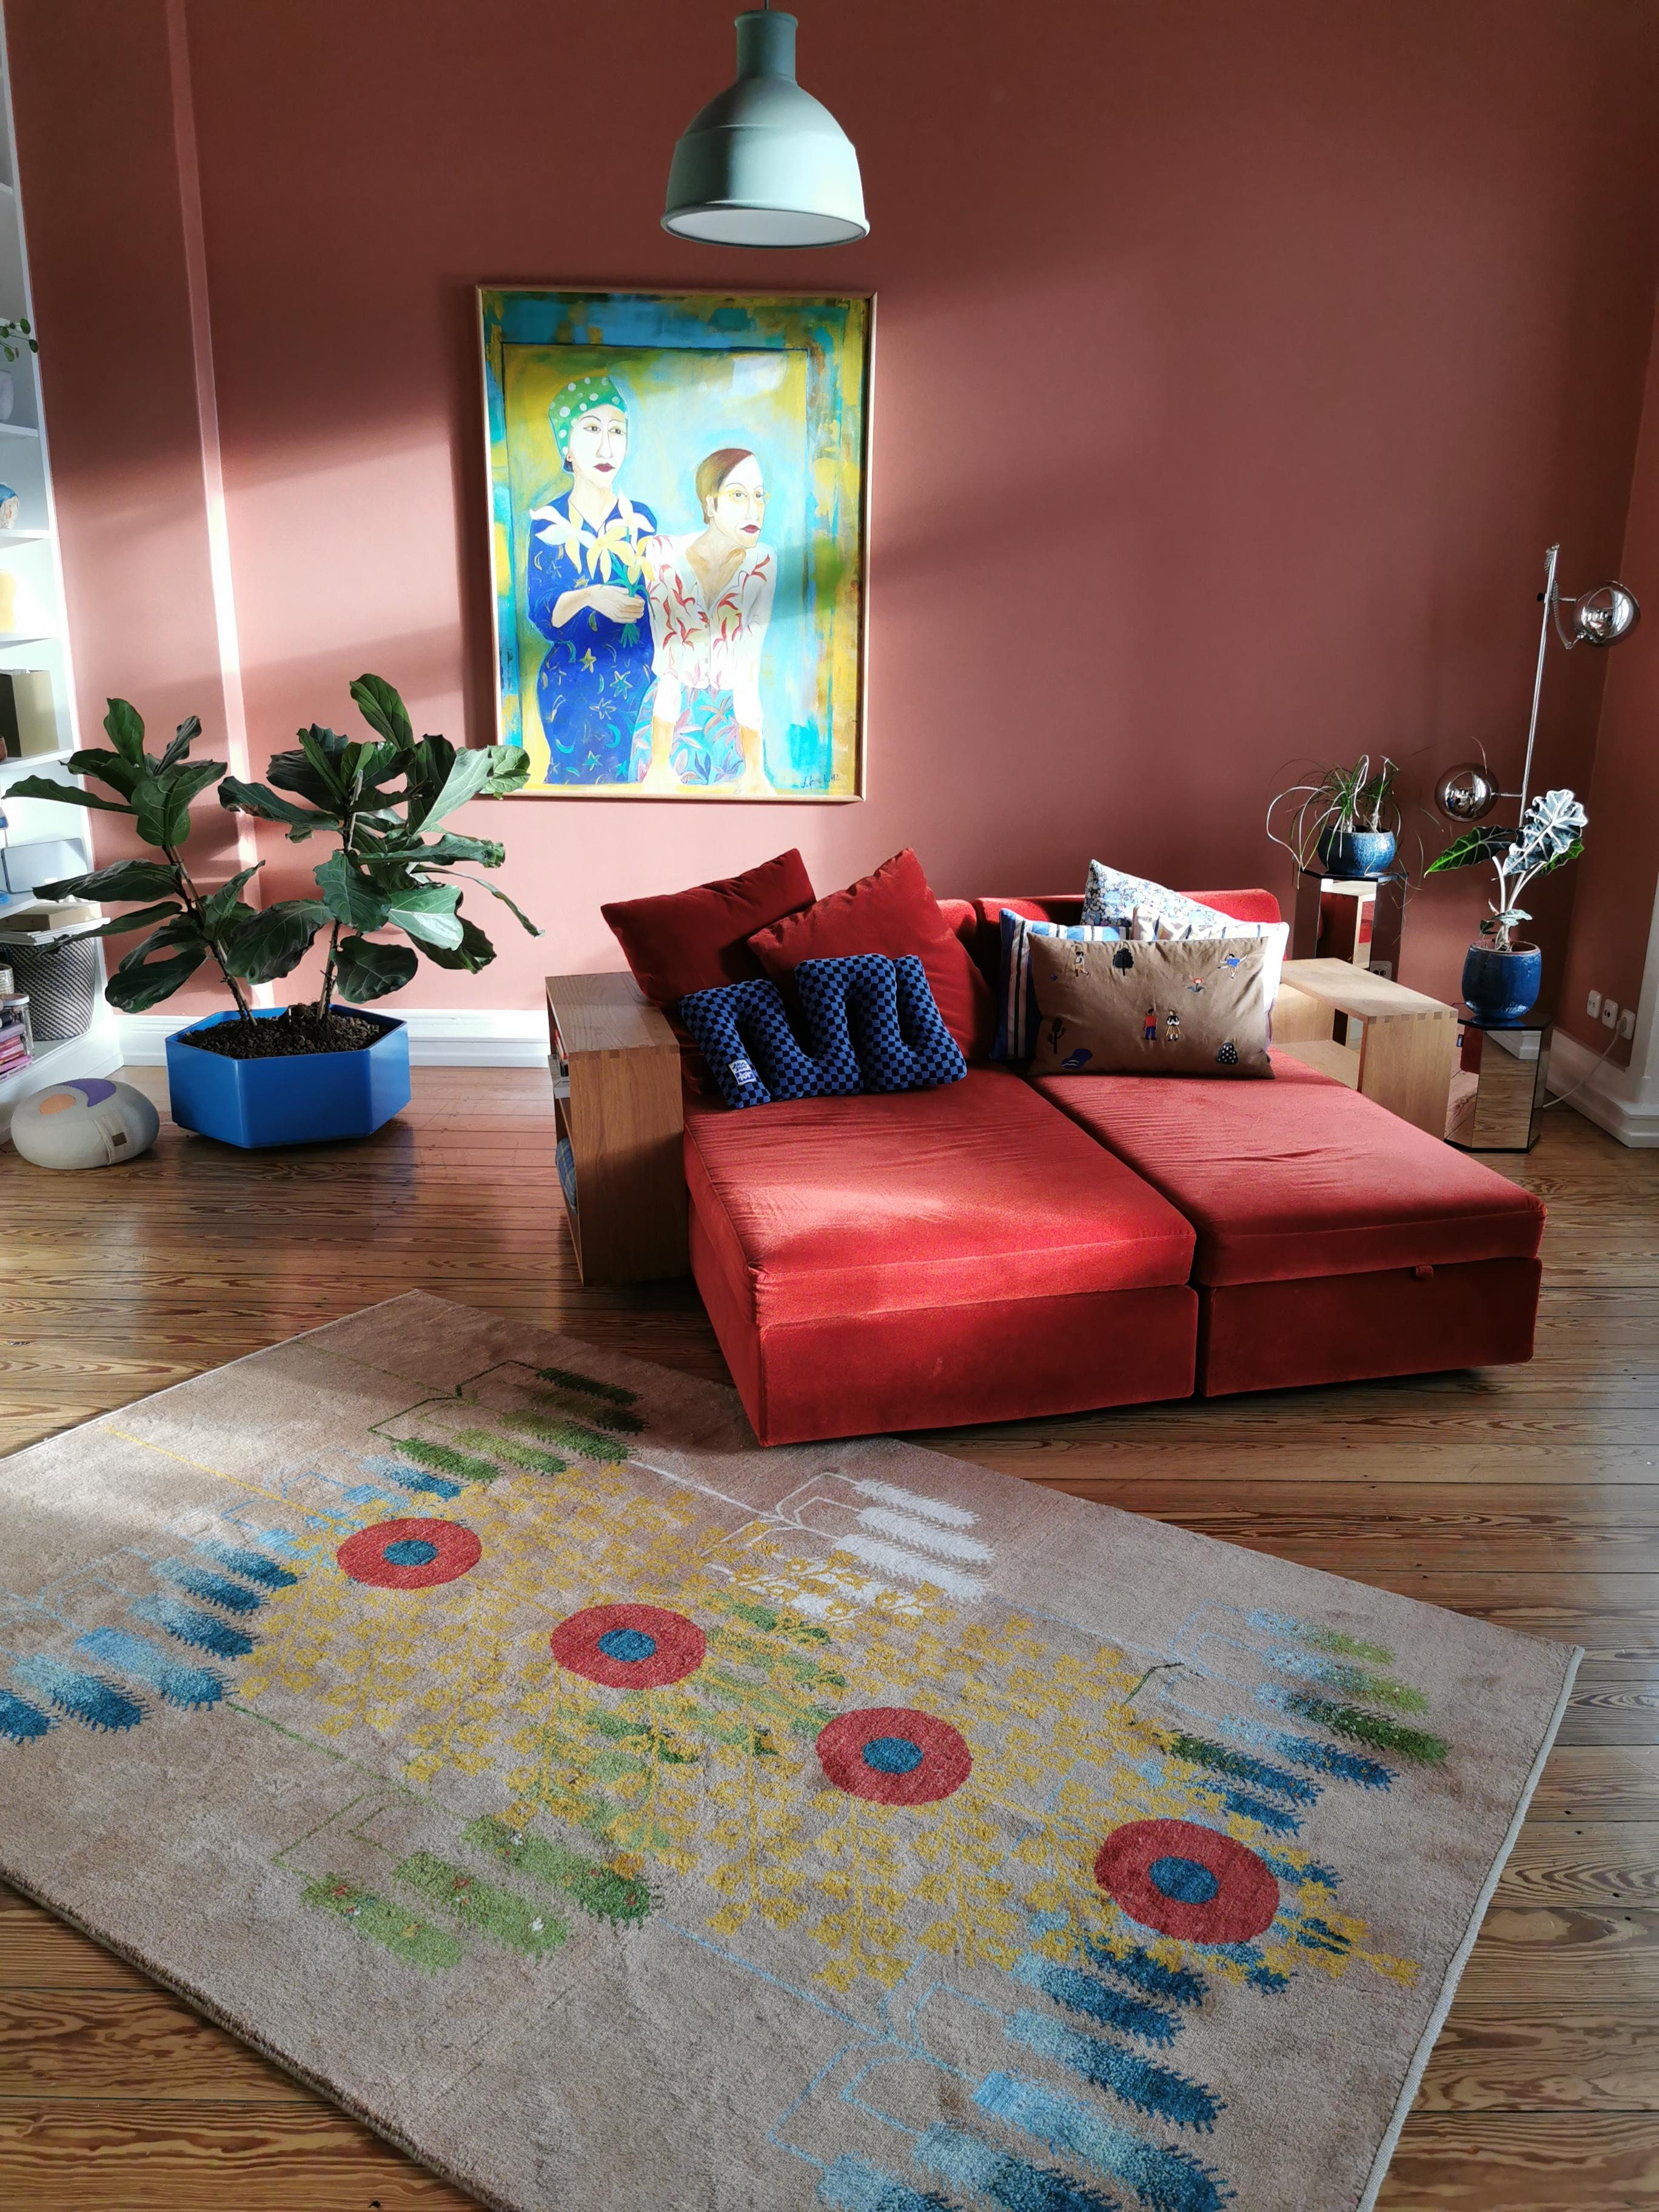 New Carpet in the house.

#carpetlove #altbauliebe #livingroom #wohnkonfetti #wohnzimmer #colorfulliving 